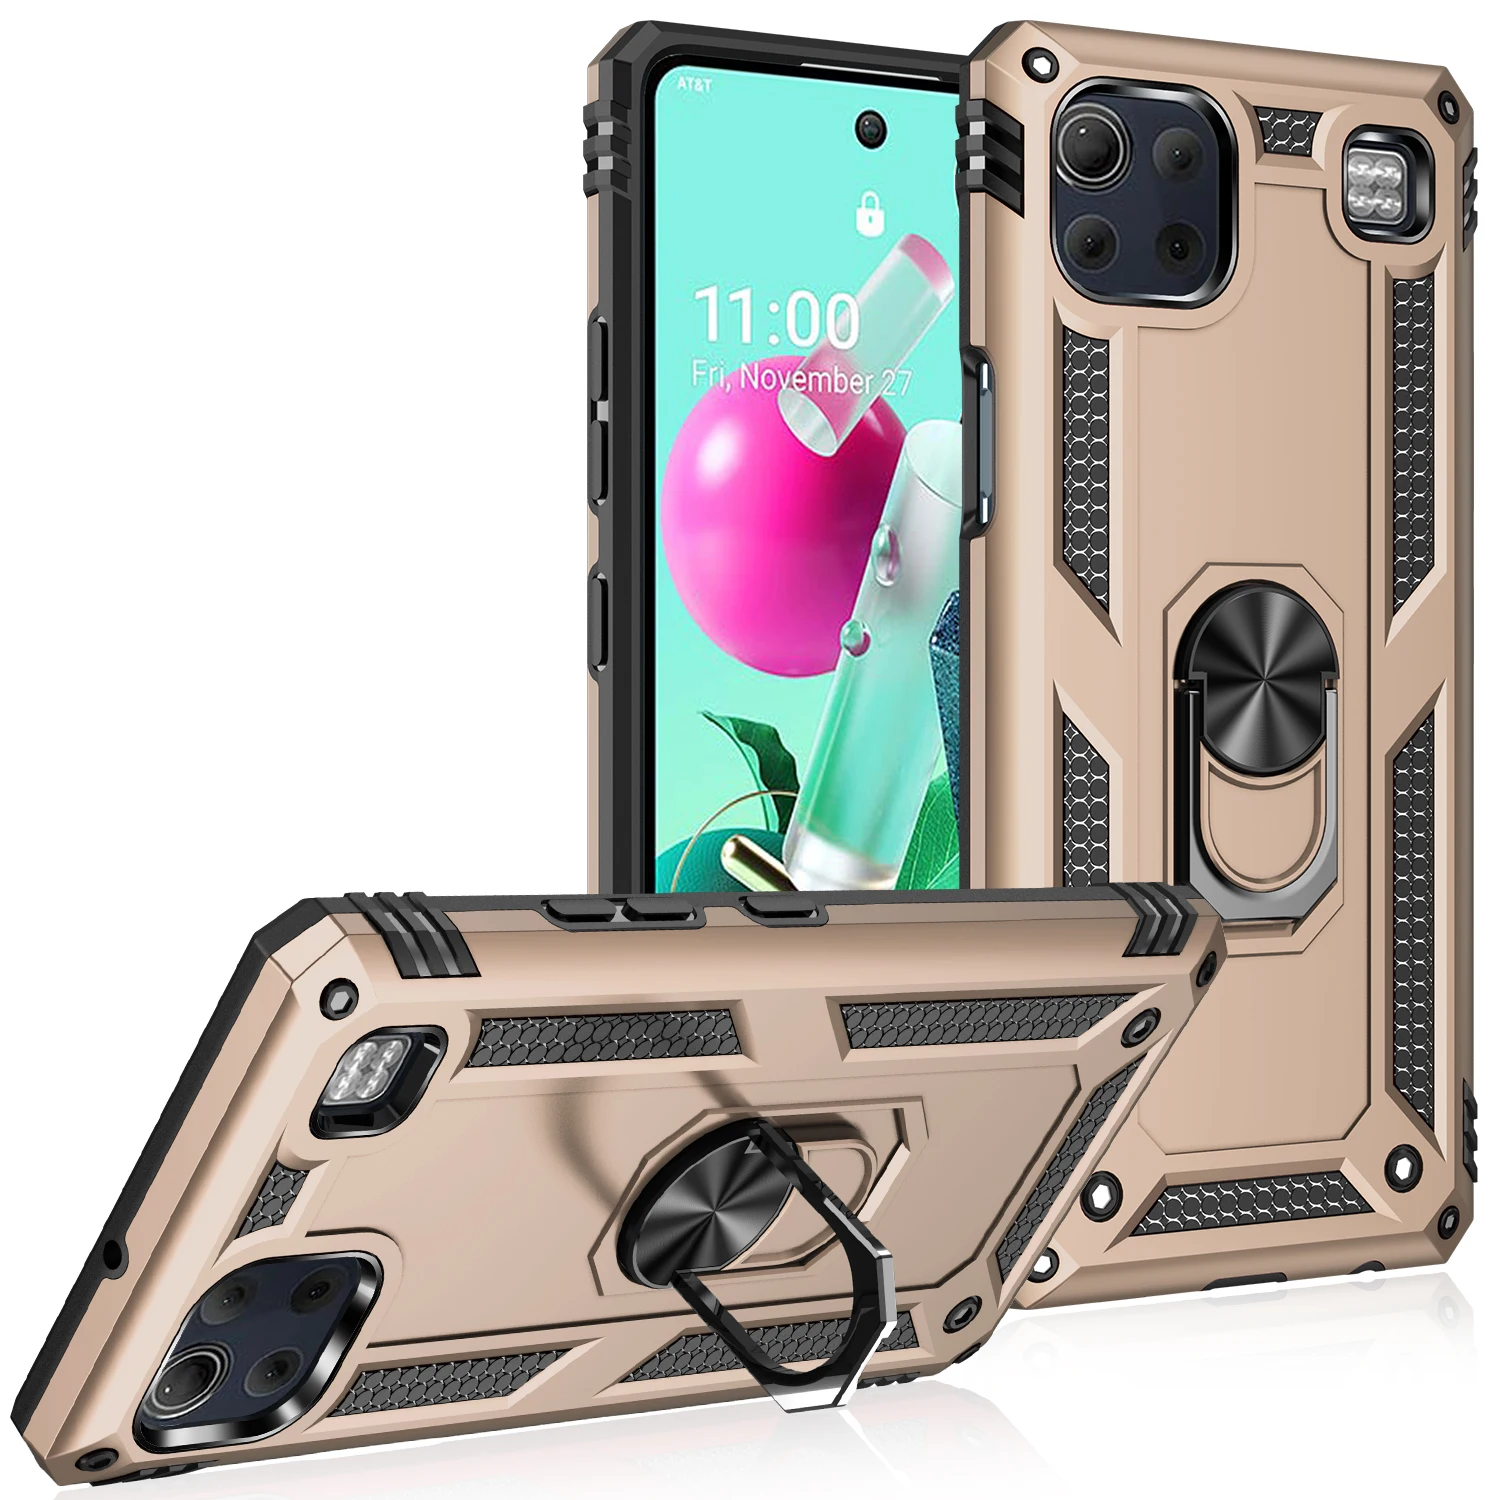 

Armor Rugged Phone Case For LG K53 K22 K50S K92 K31 K51 K40S K61 K50 K40 K30 K10 K51S K12 Plus Shockproof Stand Protection Cover